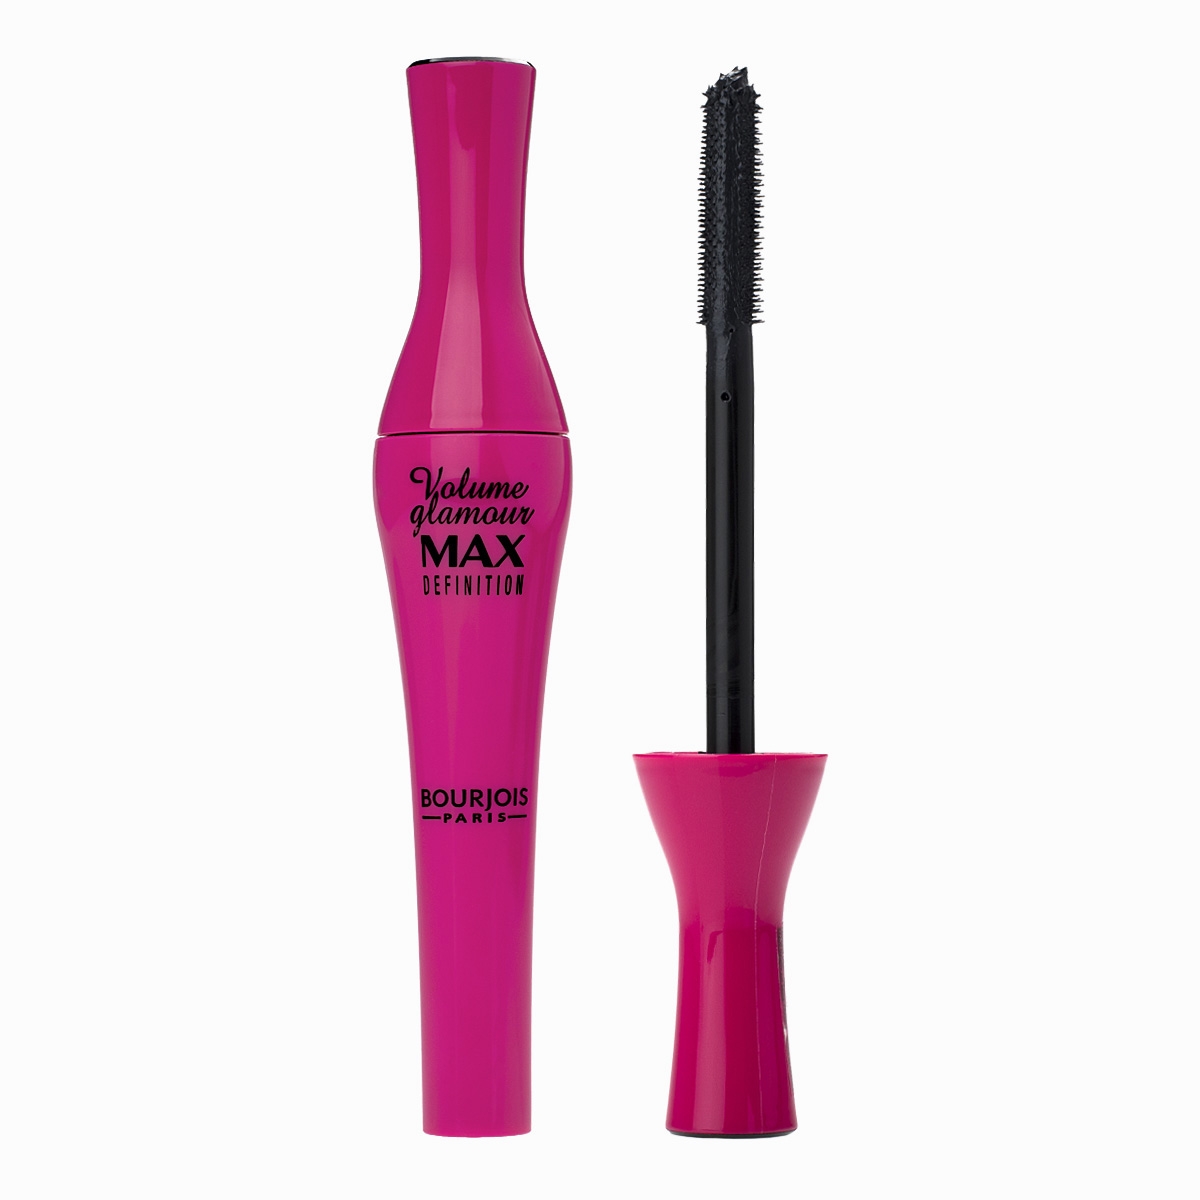 Bourjois Volume Glamour Max Definition Mascara 10ml Black